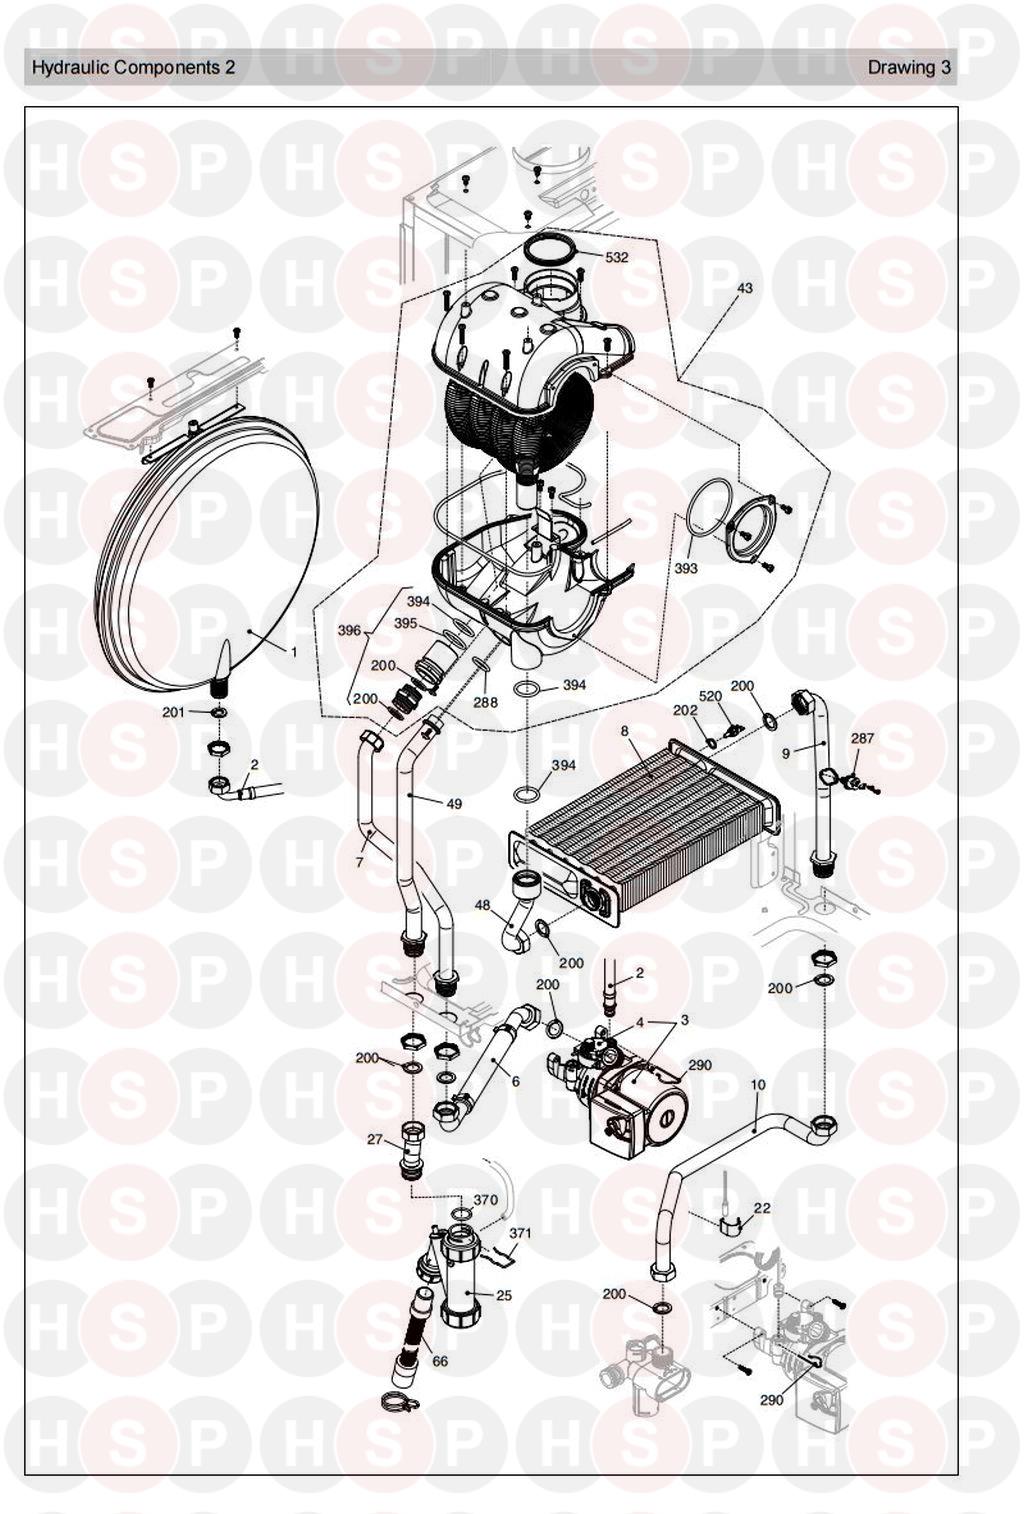 Hydraulics 2 diagram for Vokera Procombi 85HE Rev 4 (03/2010)